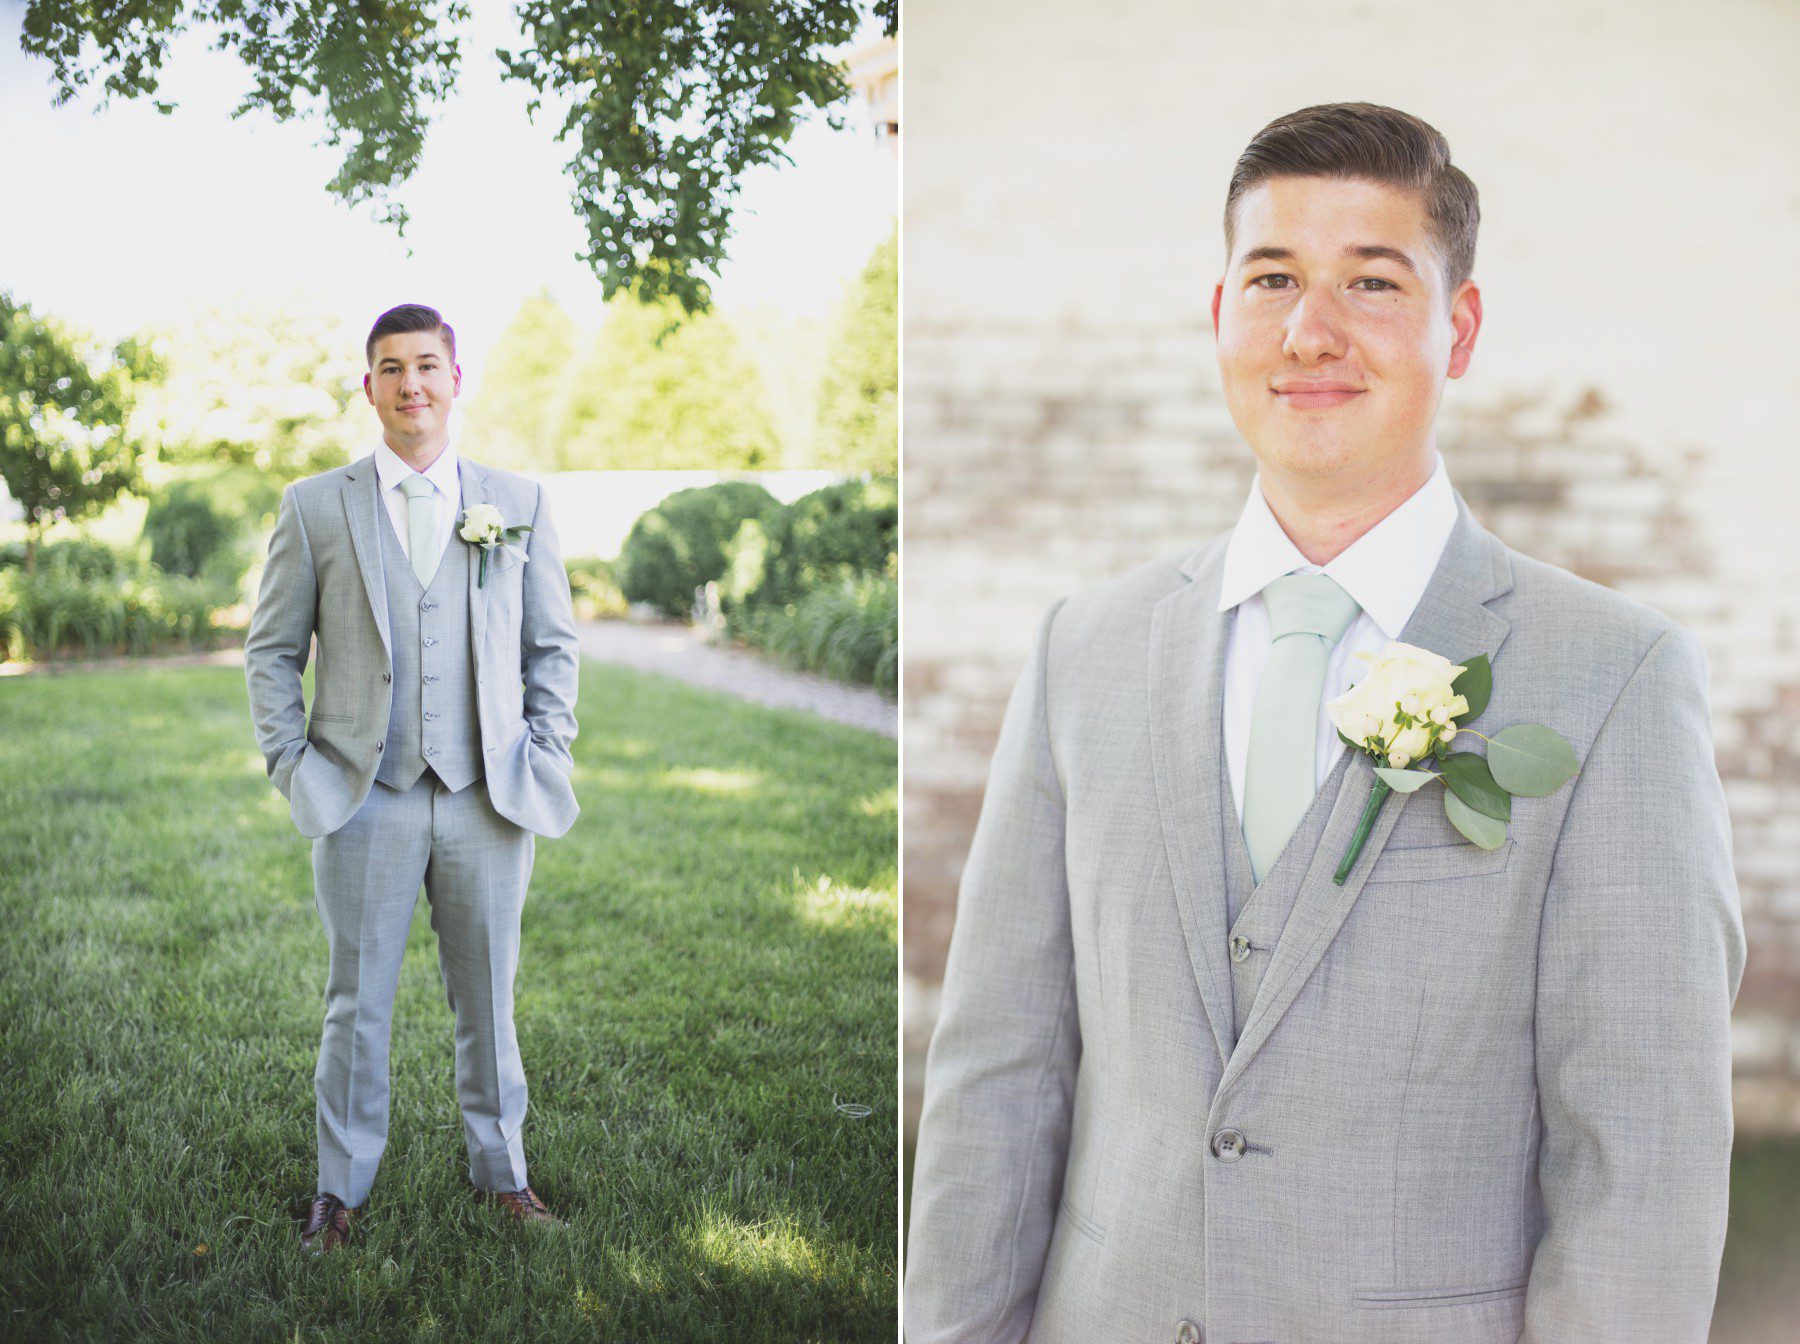 Nashville wedding photographer southern groom gray 3-piece suit